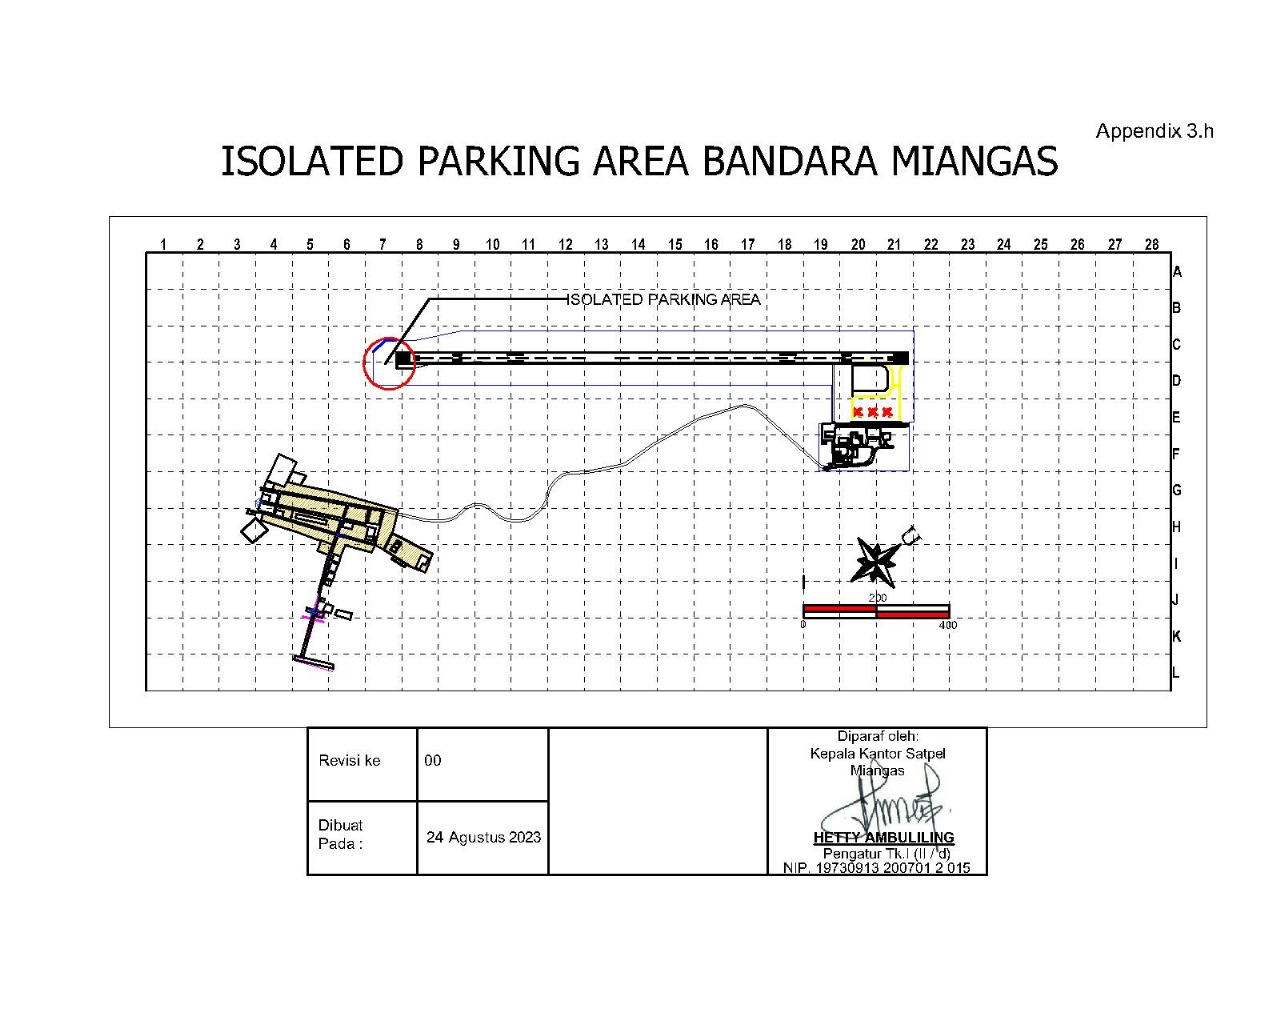 Gambar Peta Bandara Isolated Parking Area Bandara Miangas